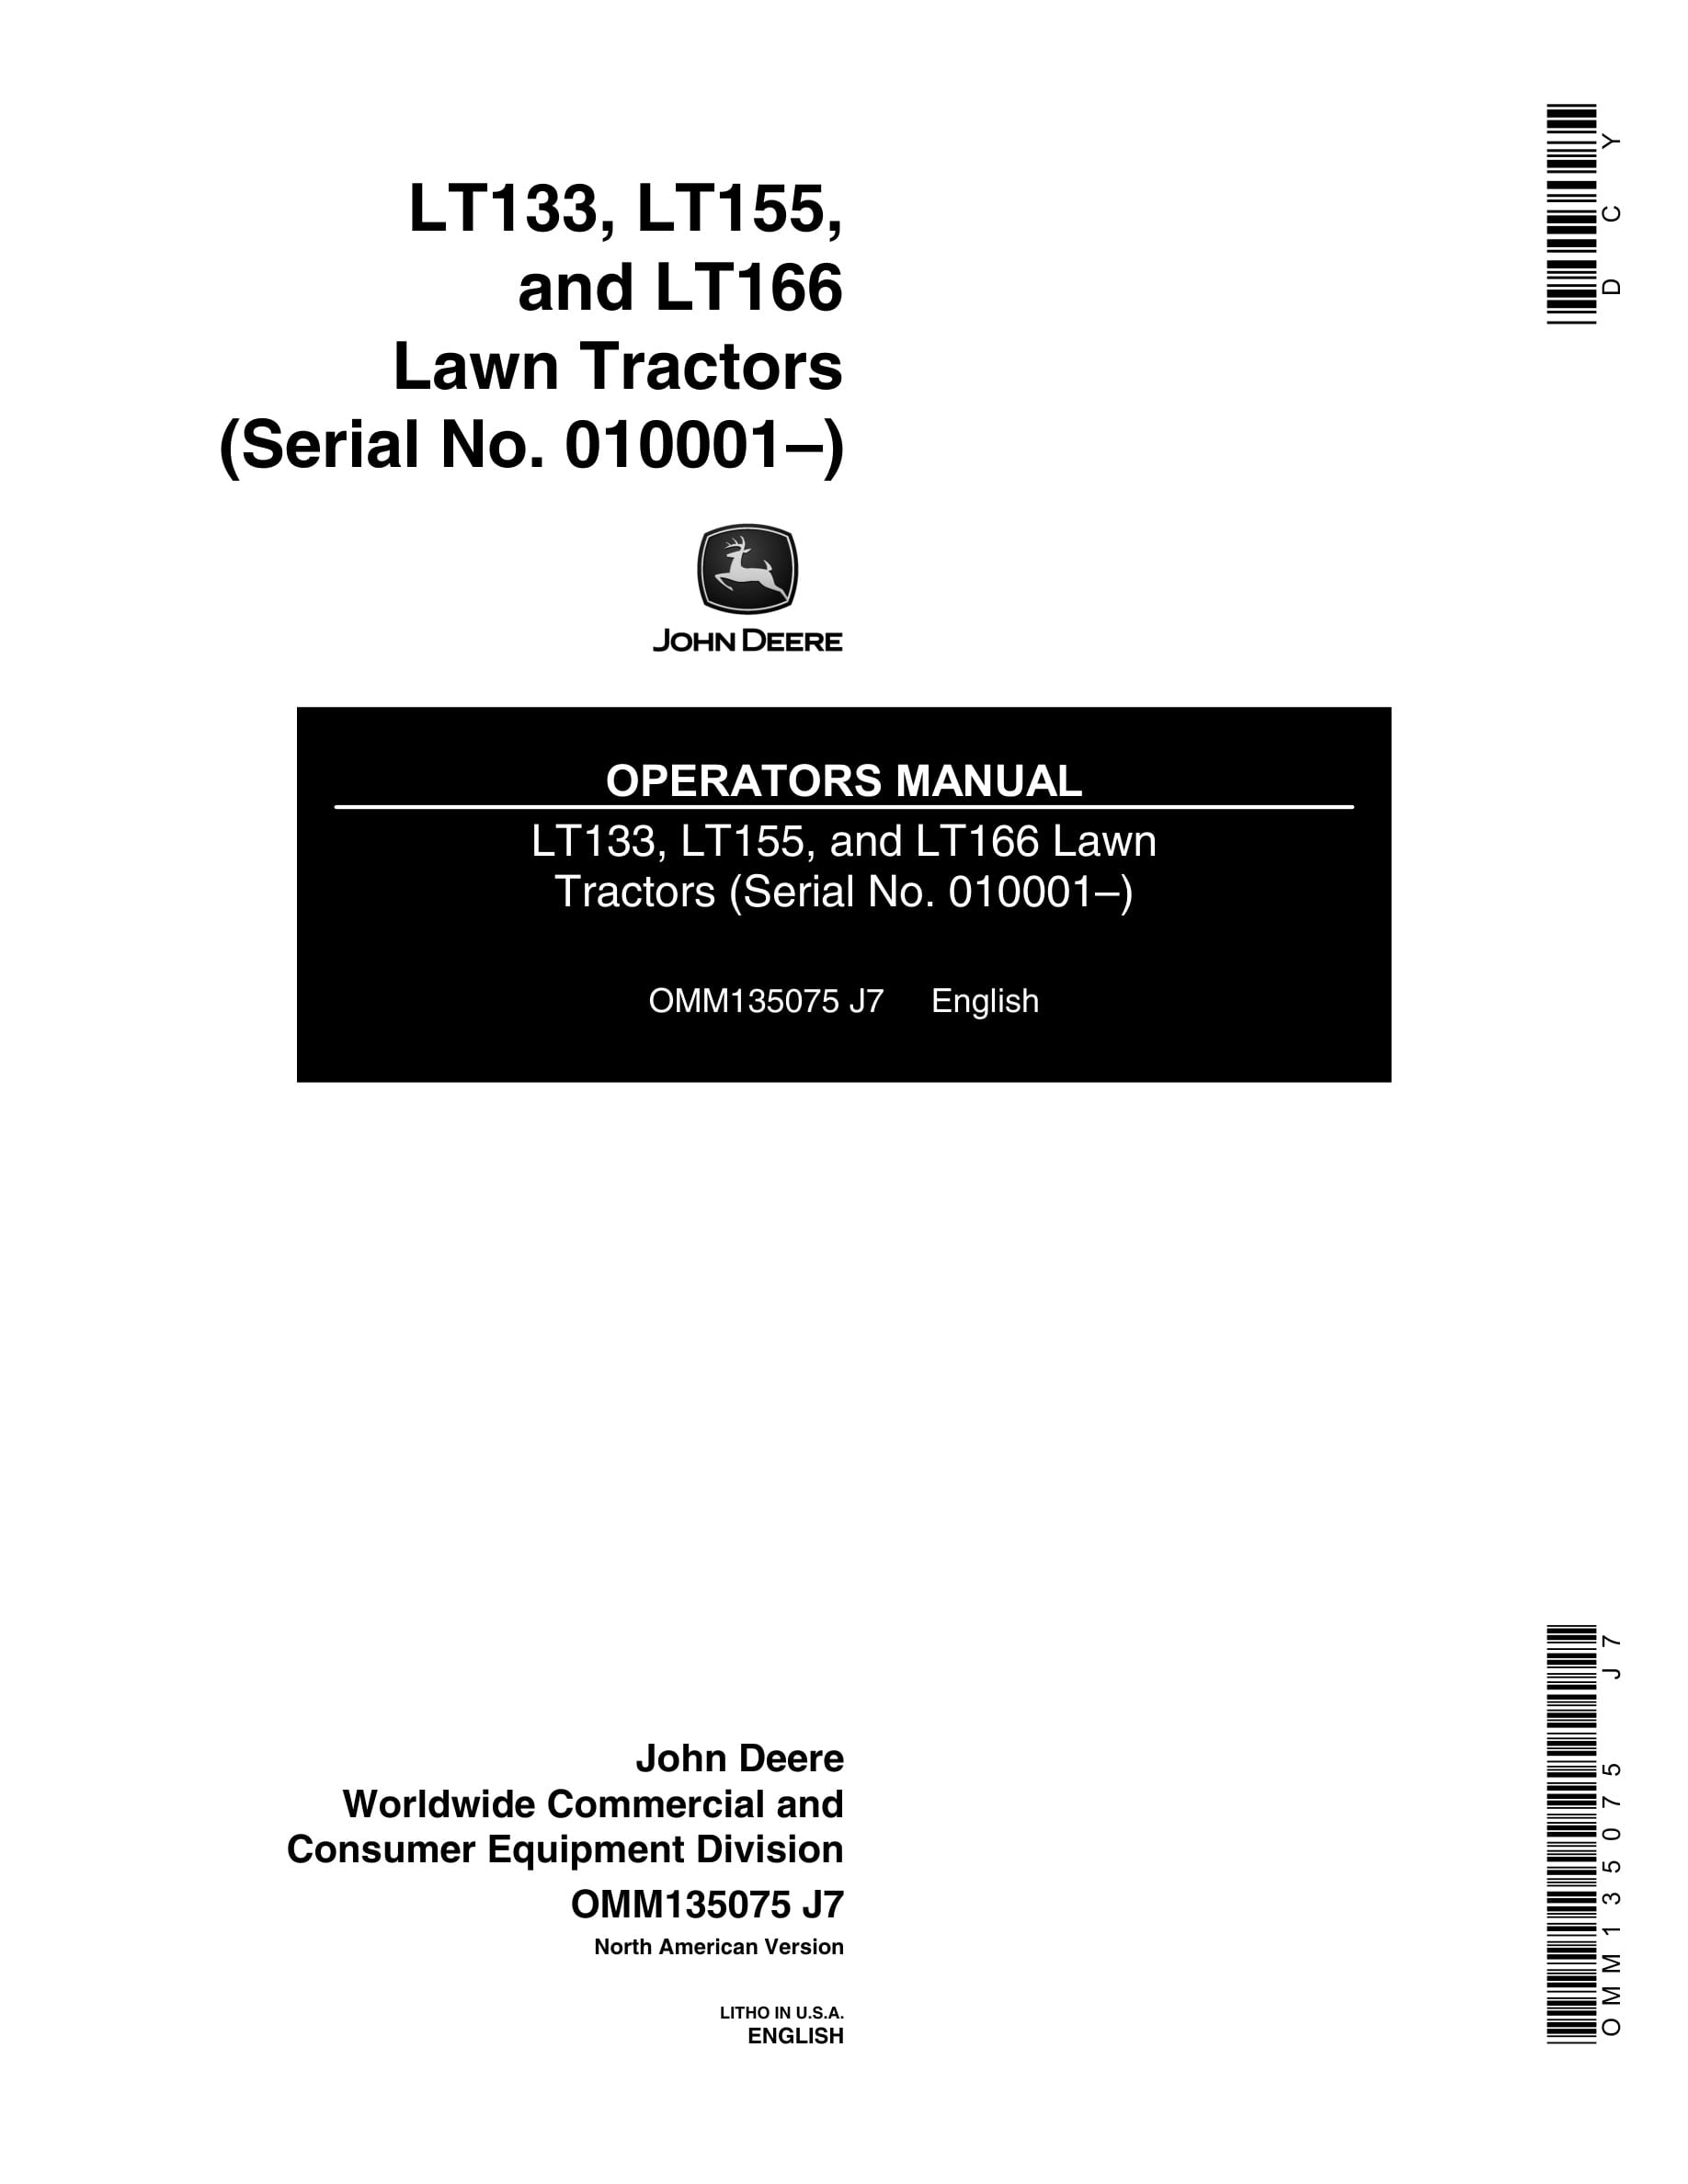 John Deere LT133, LT155, and LT166 Tractor Operator Manual OMM135075-1